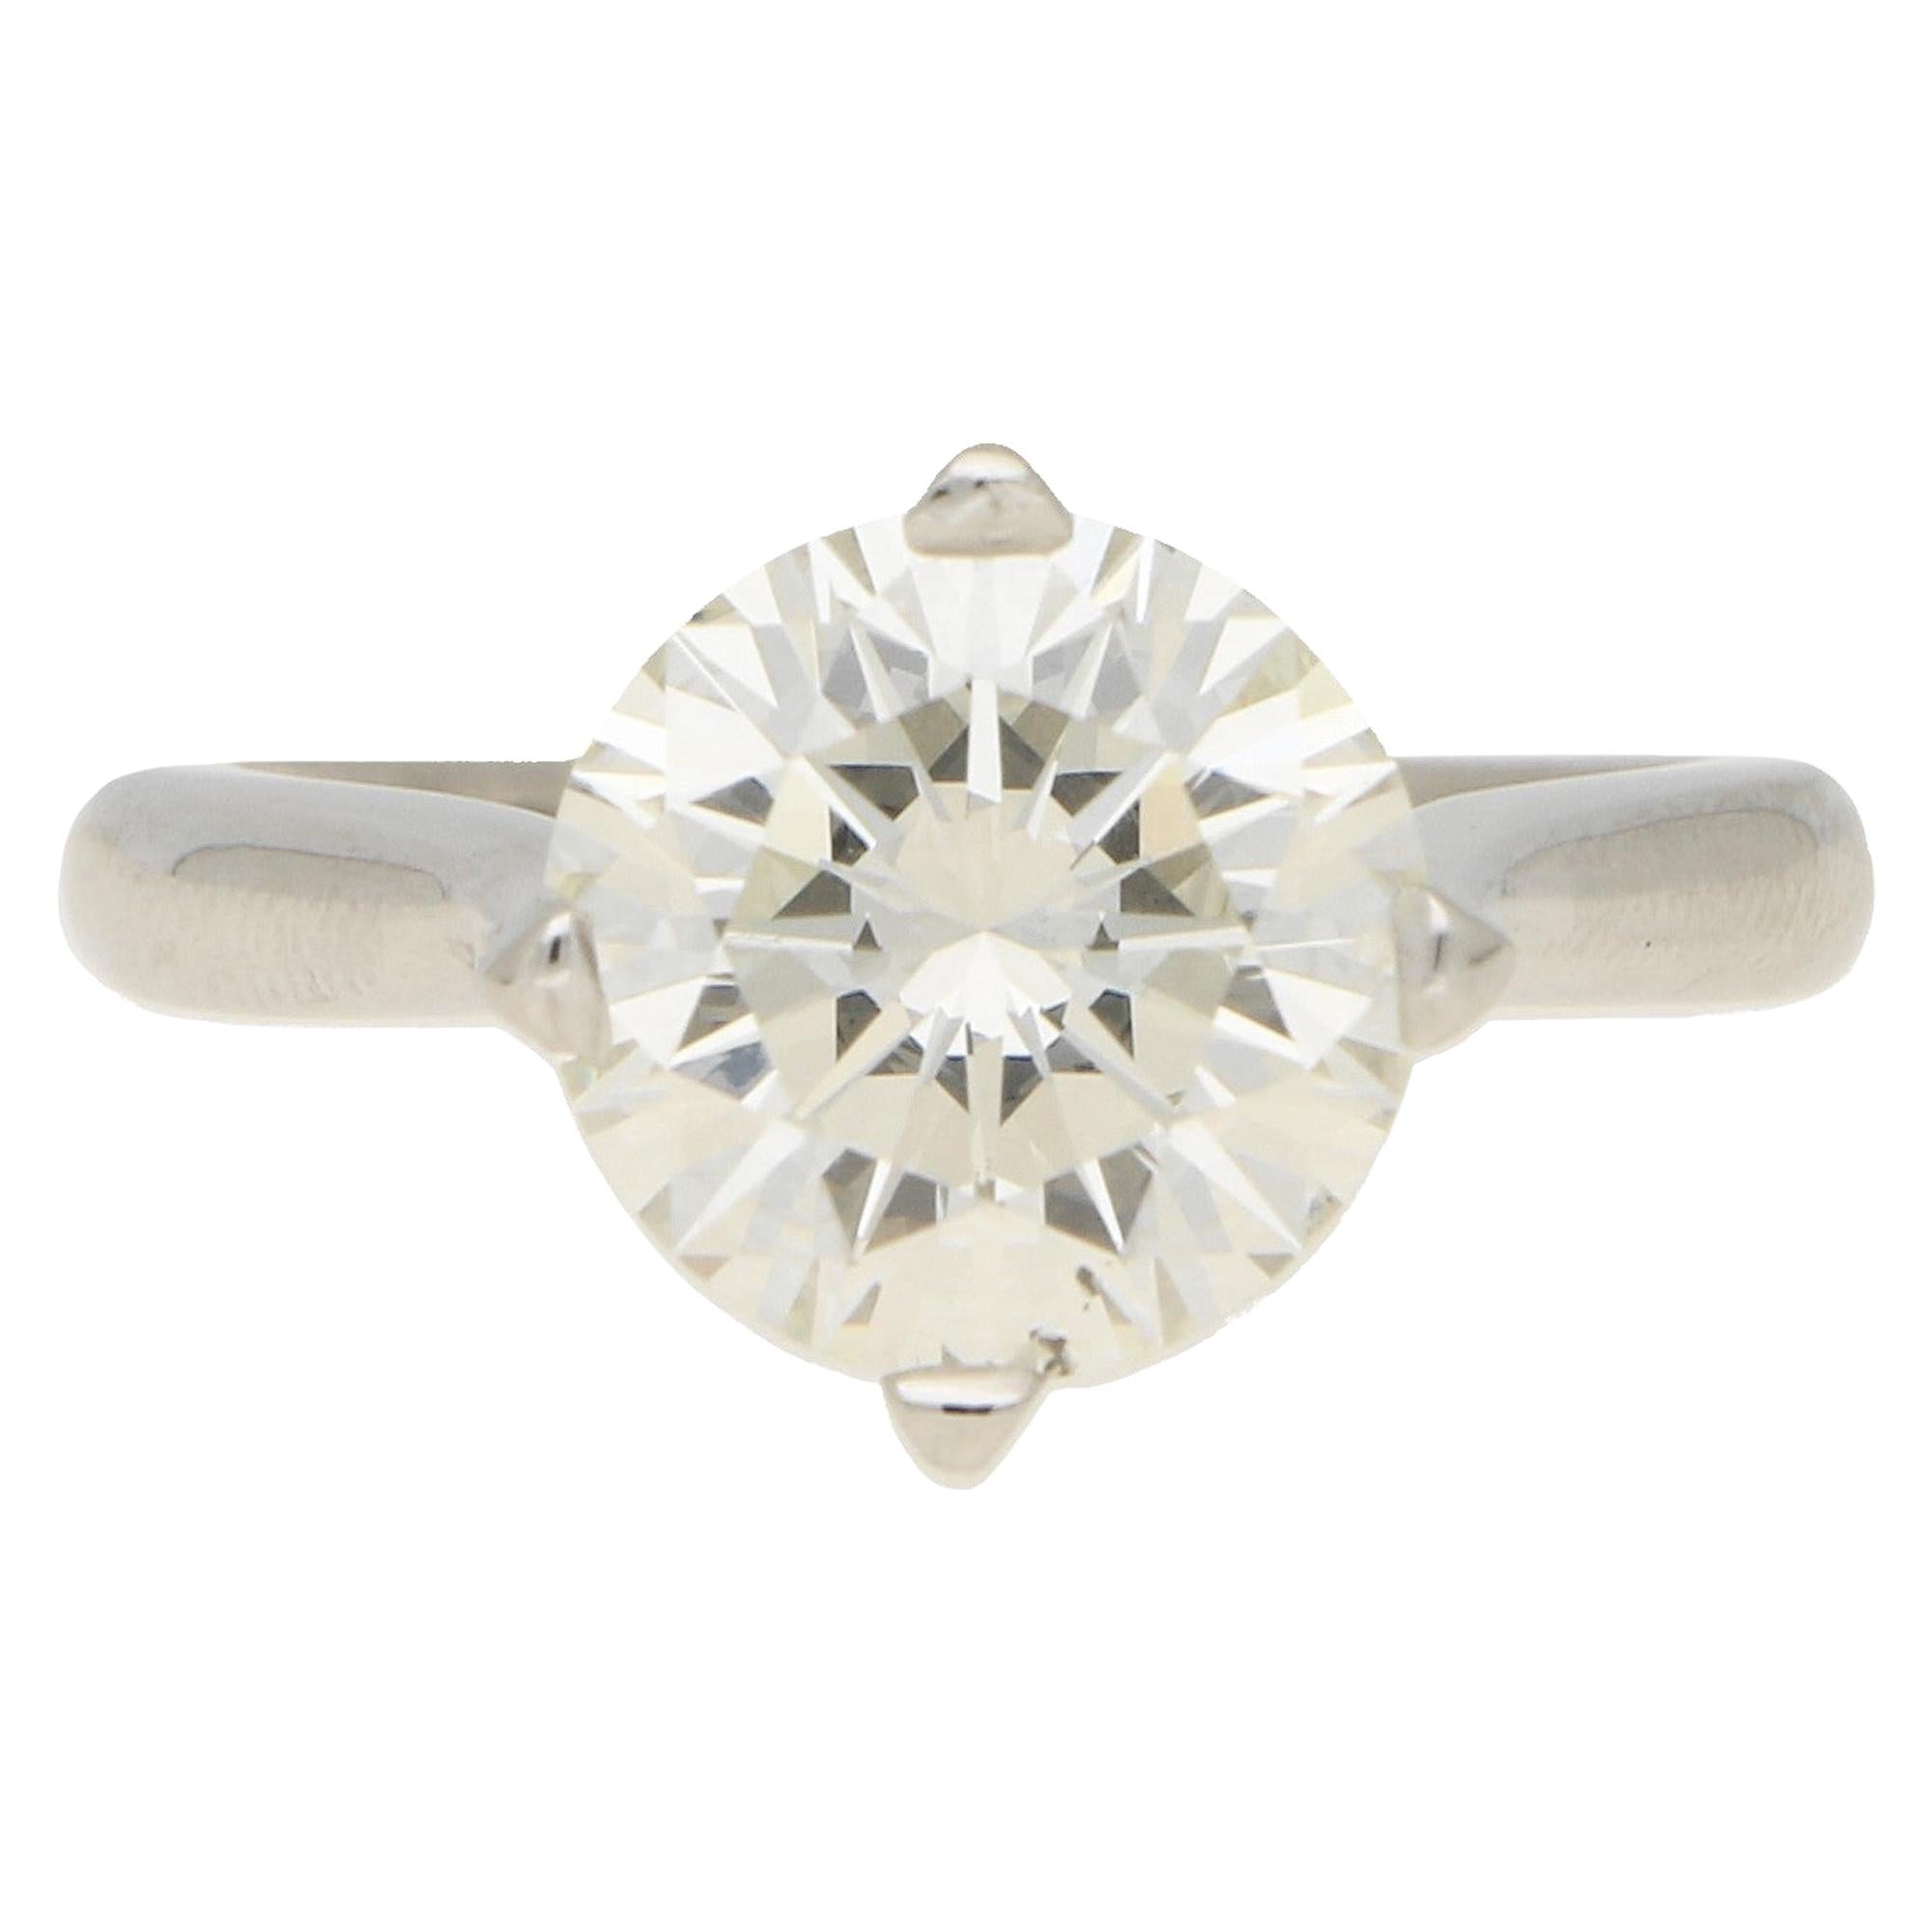 Boodles 4.06 Carat Diamond Solitaire Engagement Ring Set in Platinum